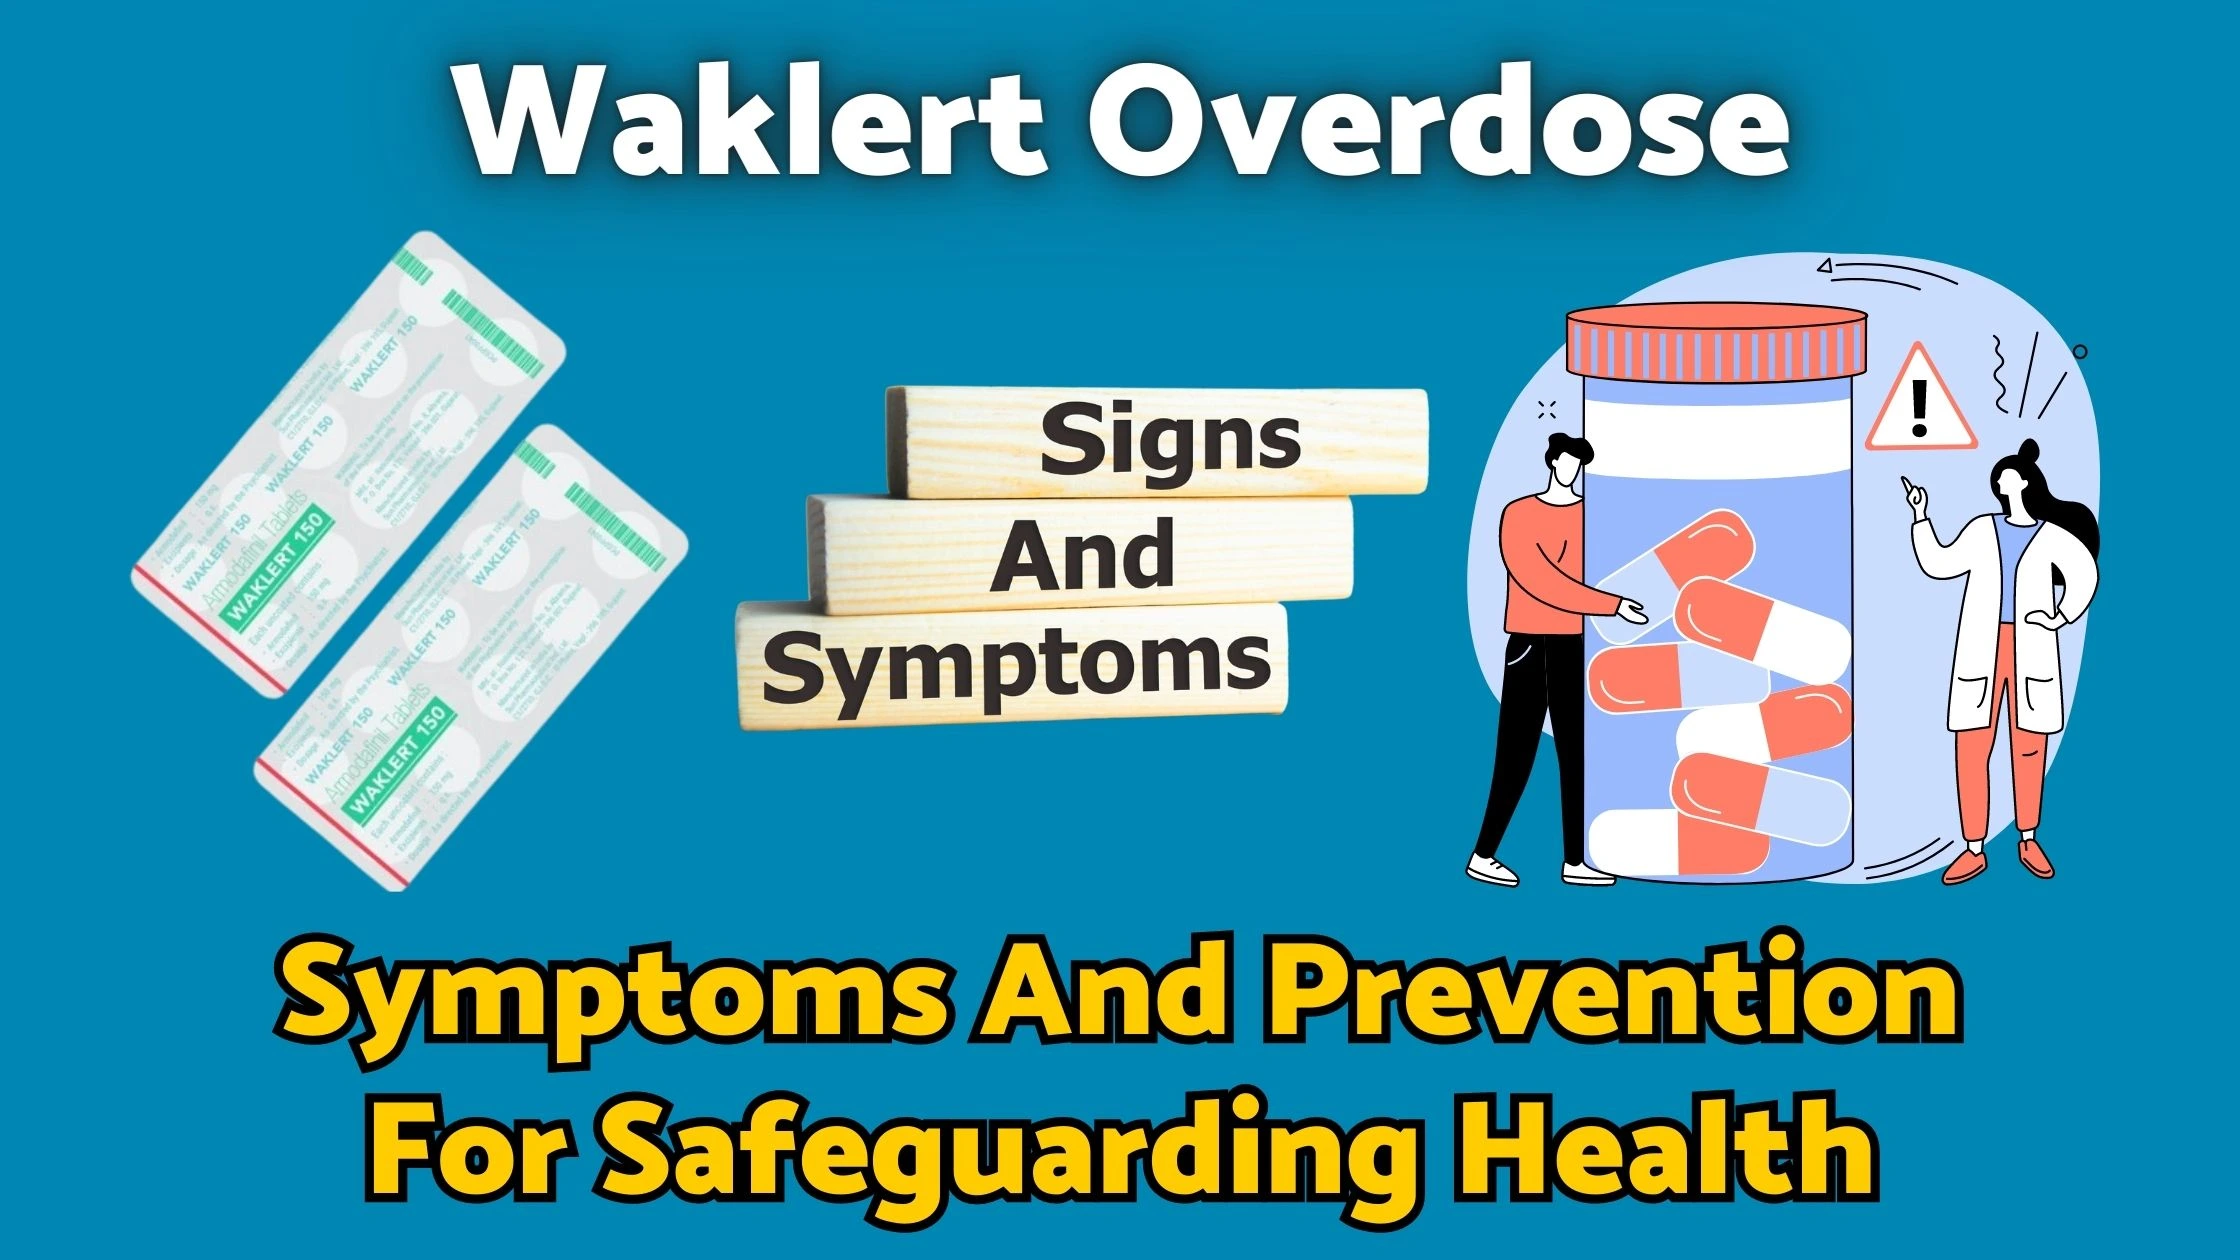 Waklert Overdose- Symptoms And Prevention For Safeguarding Health